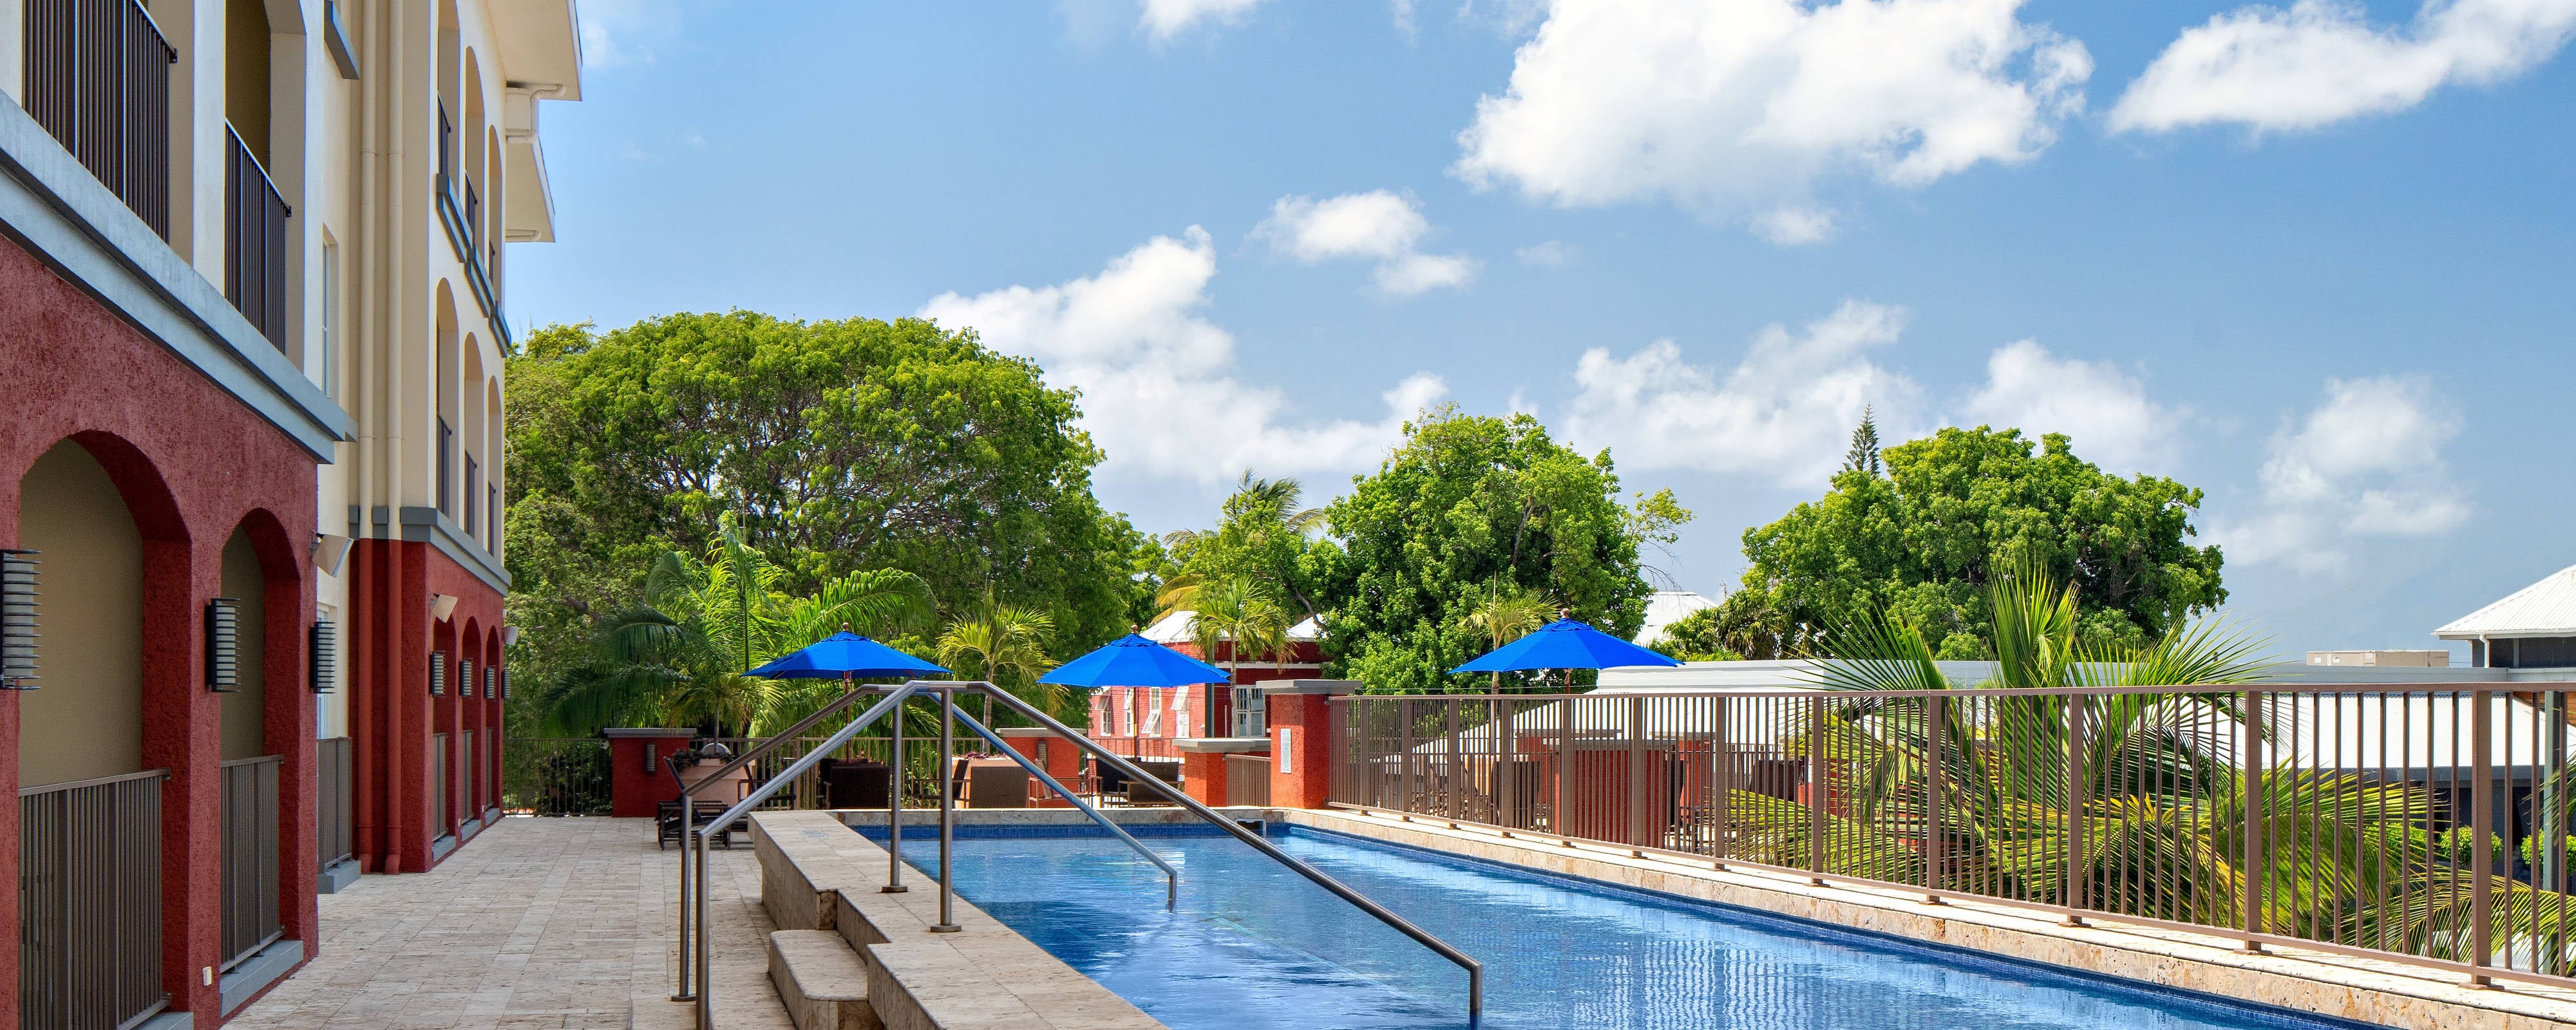 Image for Courtyard Bridgetown, Barbados, a Marriott hotel.